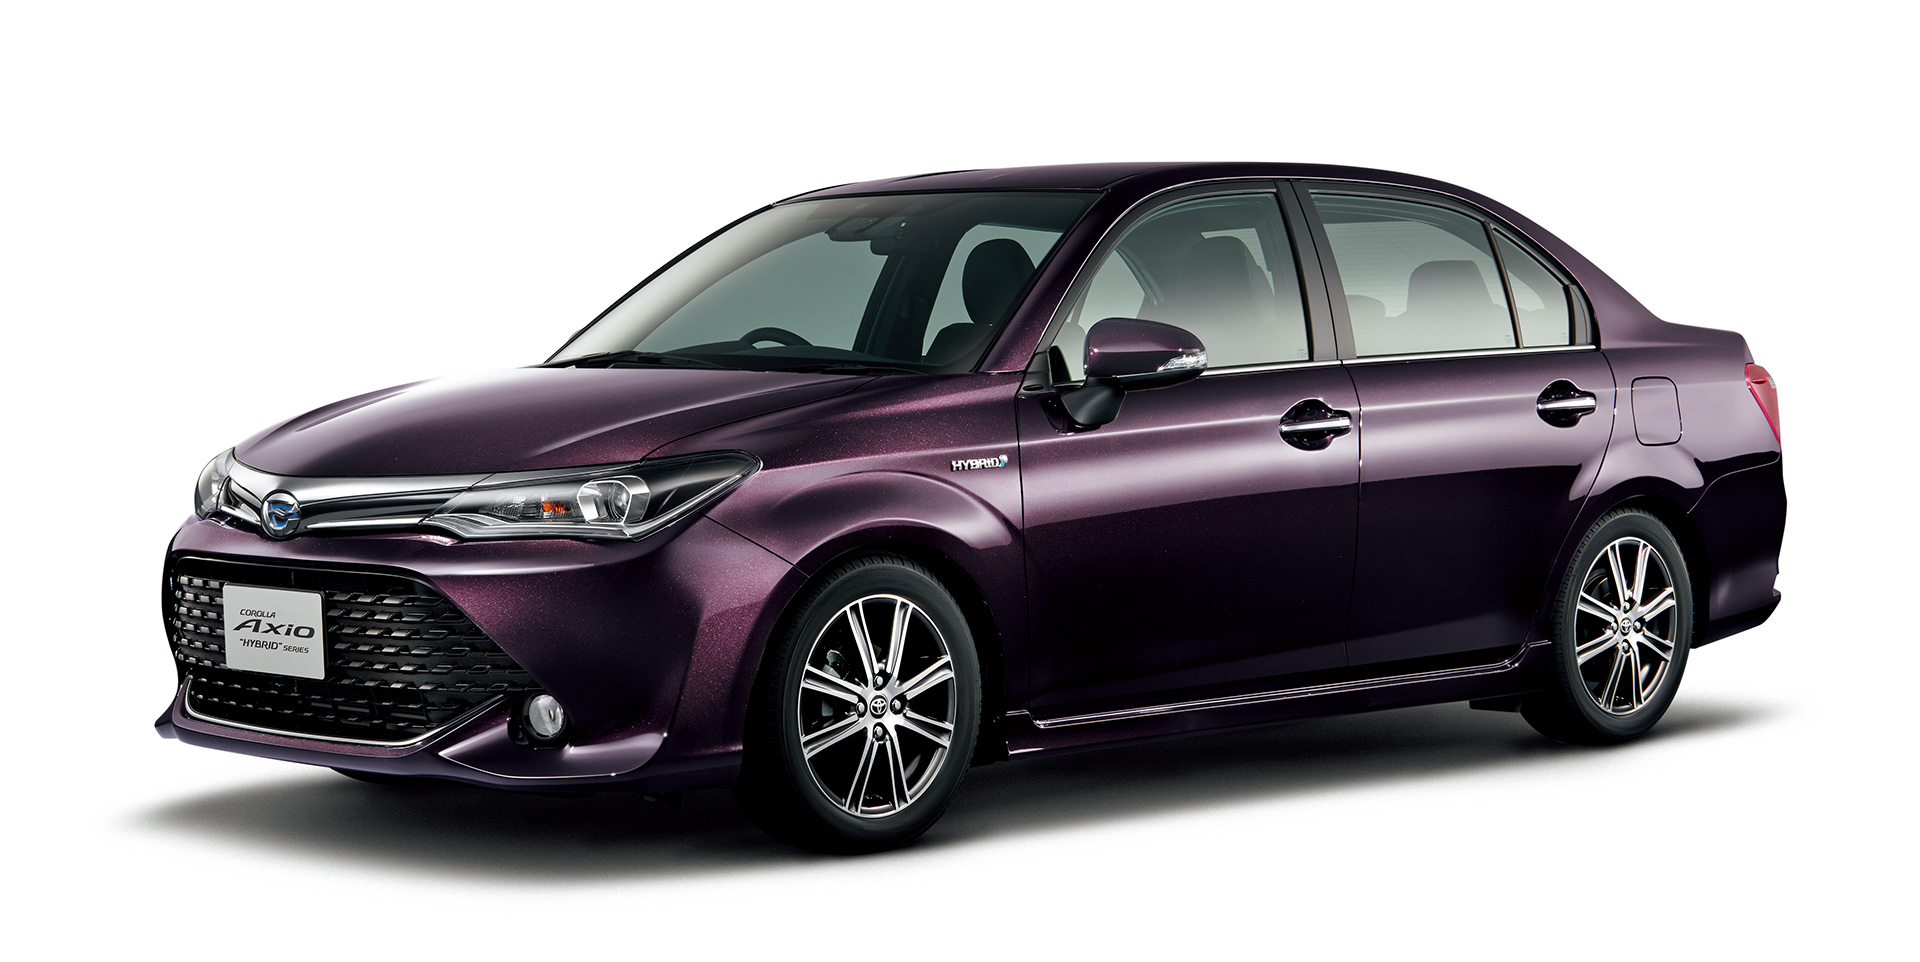 Berita, Toyota Corolla Axio Hybrid: Generasi Terbaru Toyota Corolla Dirilis Maret 2018